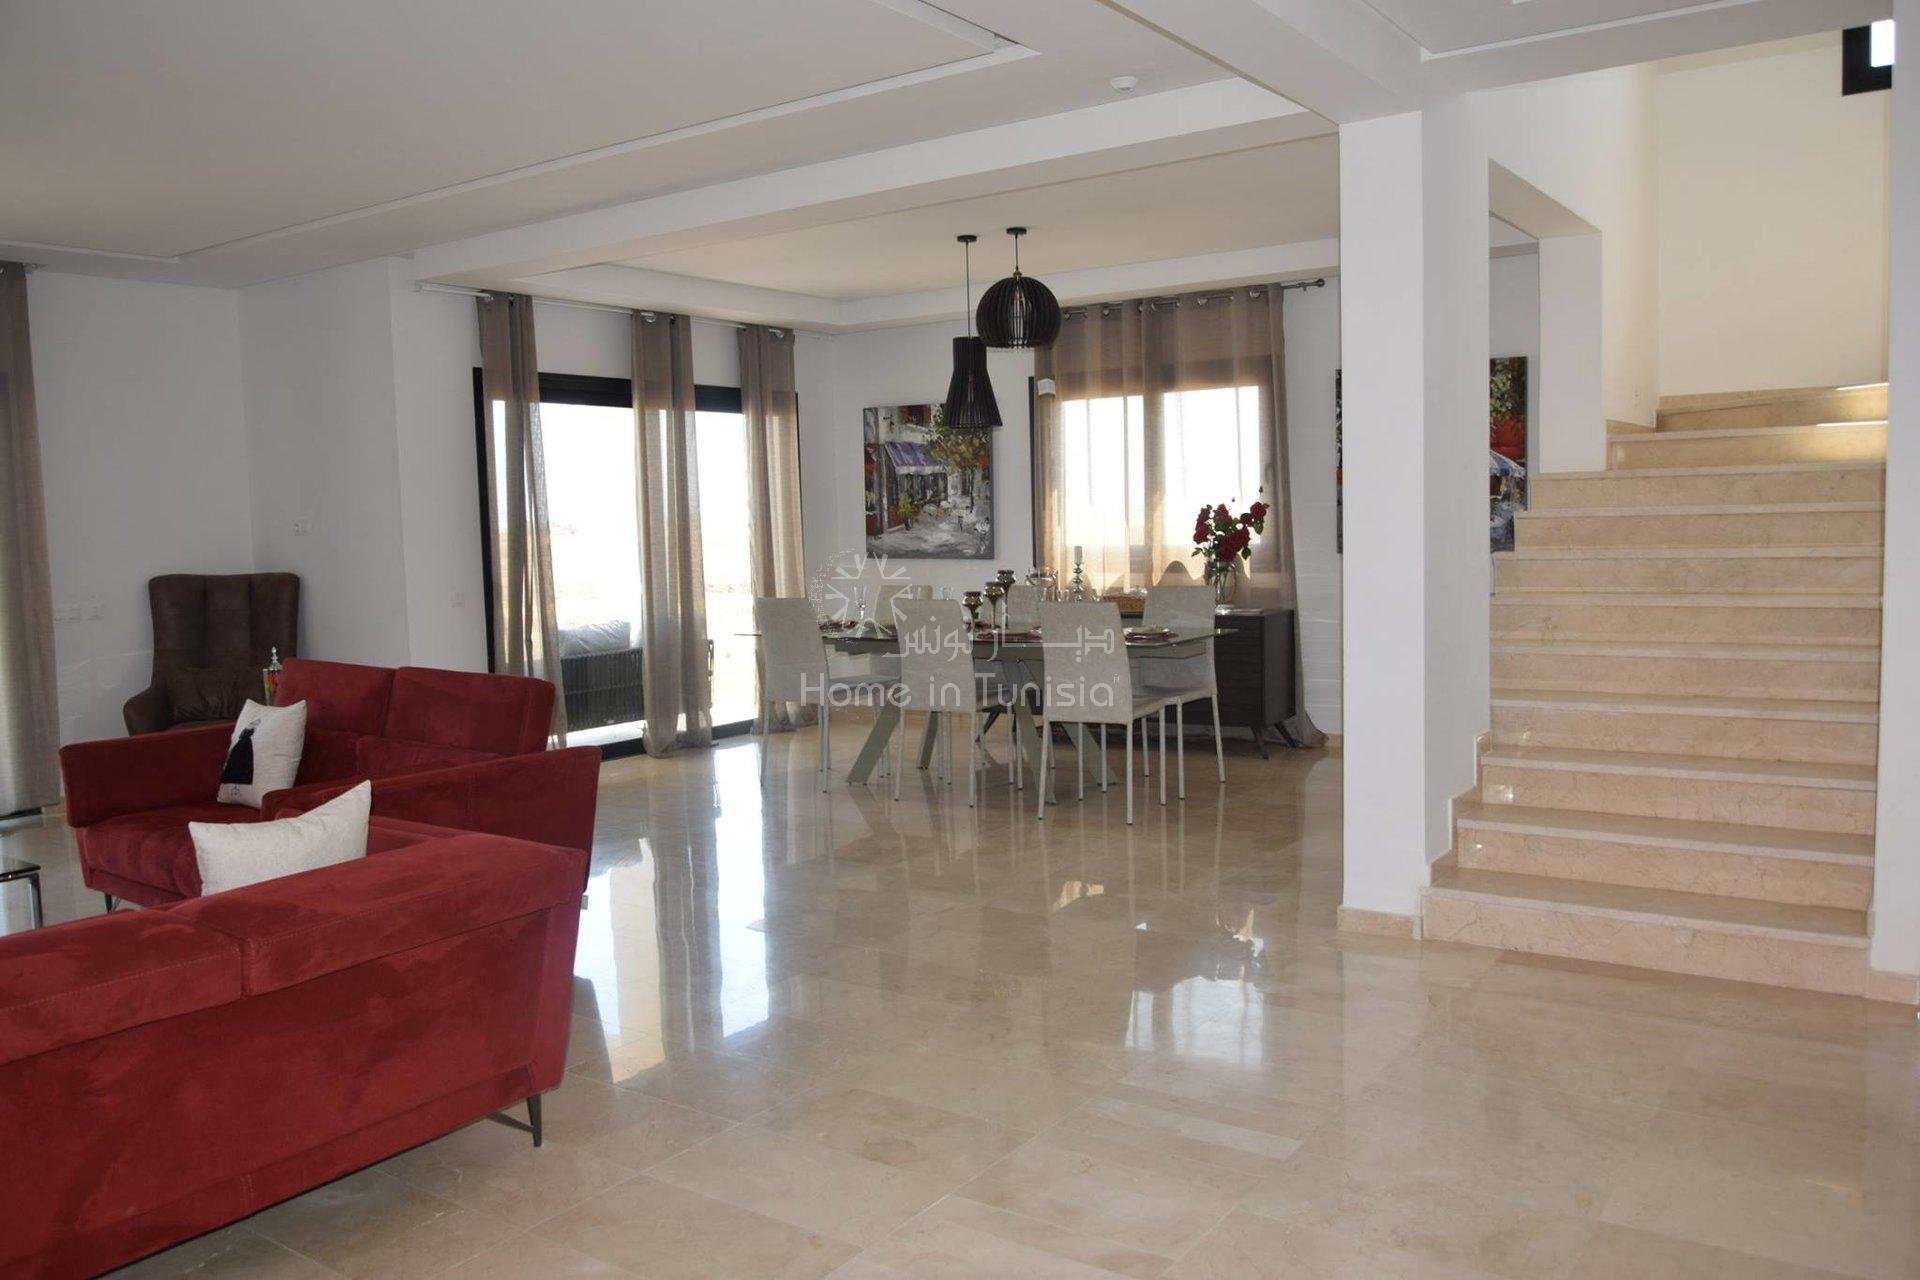 Golf résidence villa golf Hermes isolée 16, avec vue directe face au golf Tunis Bay